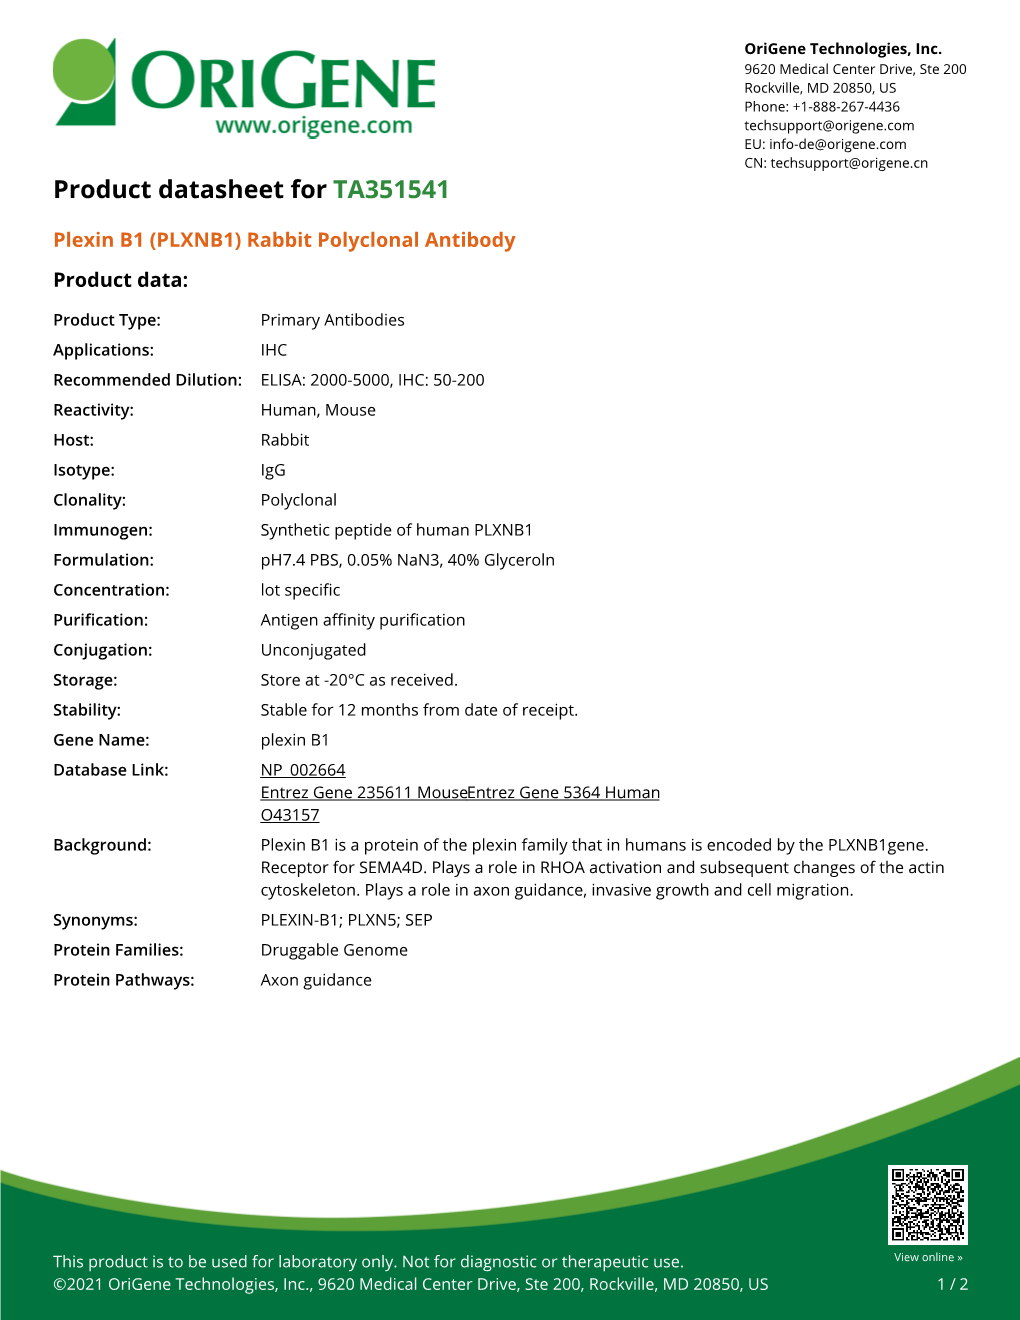 Plexin B1 (PLXNB1) Rabbit Polyclonal Antibody Product Data